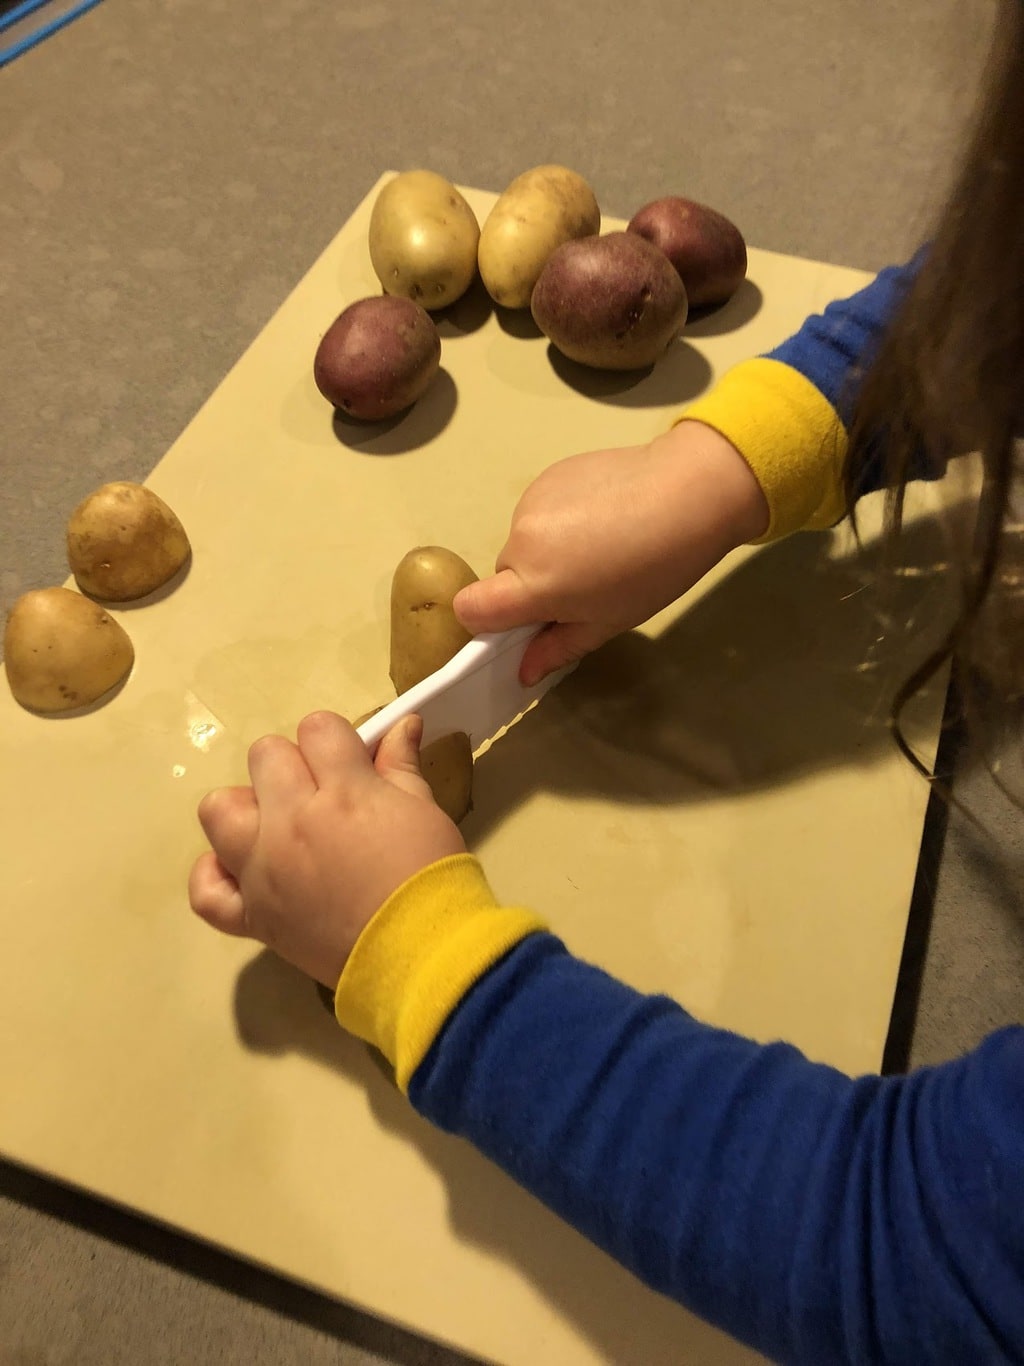 Child slicing potatoes